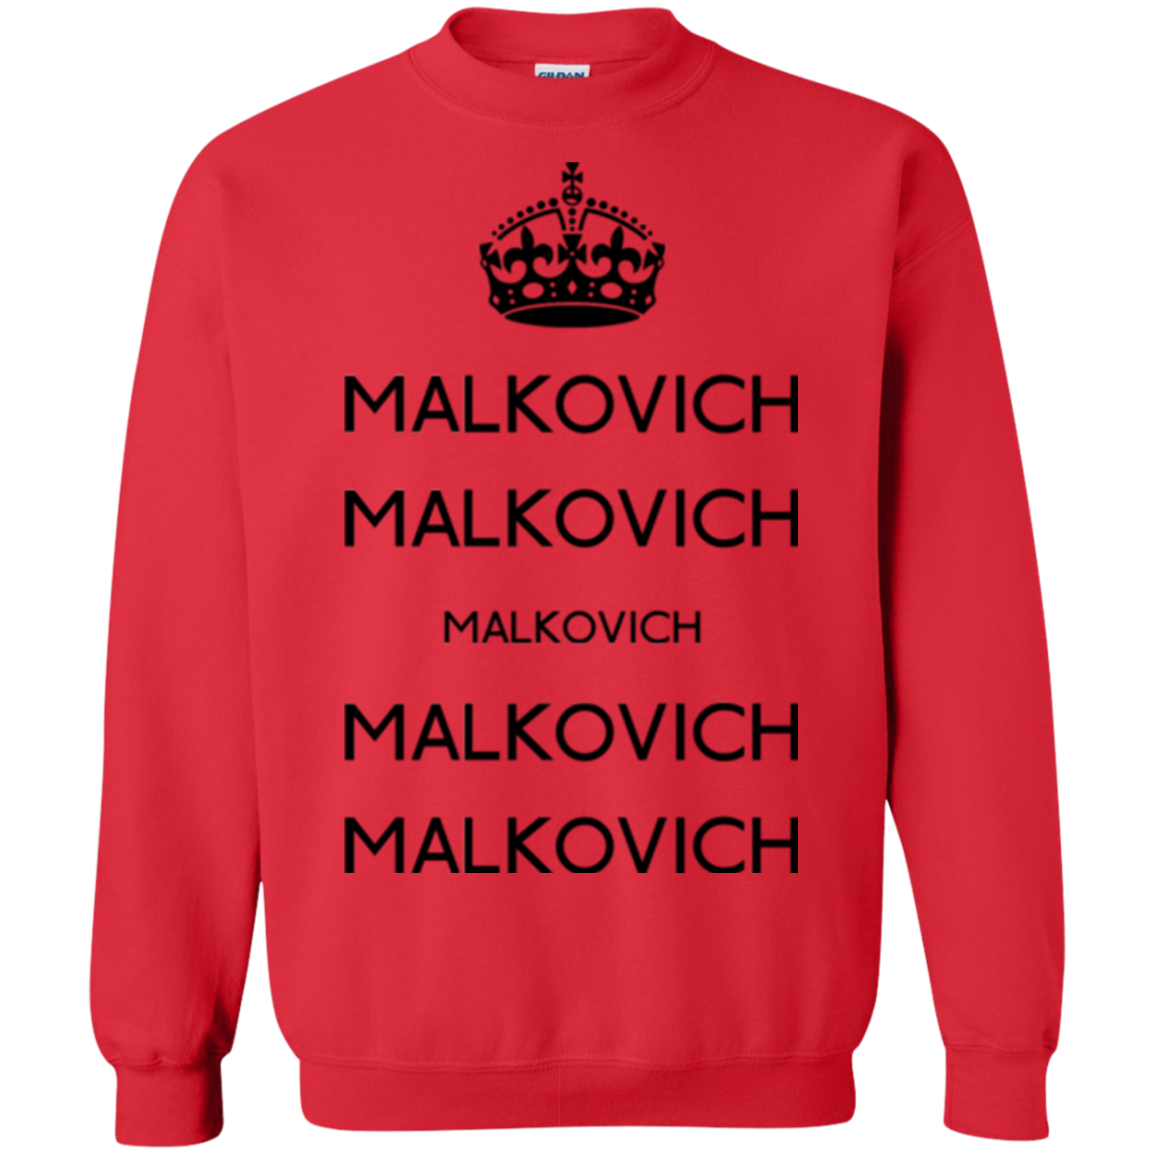 Keep Calm Malkovich Crewneck Sweatshirt